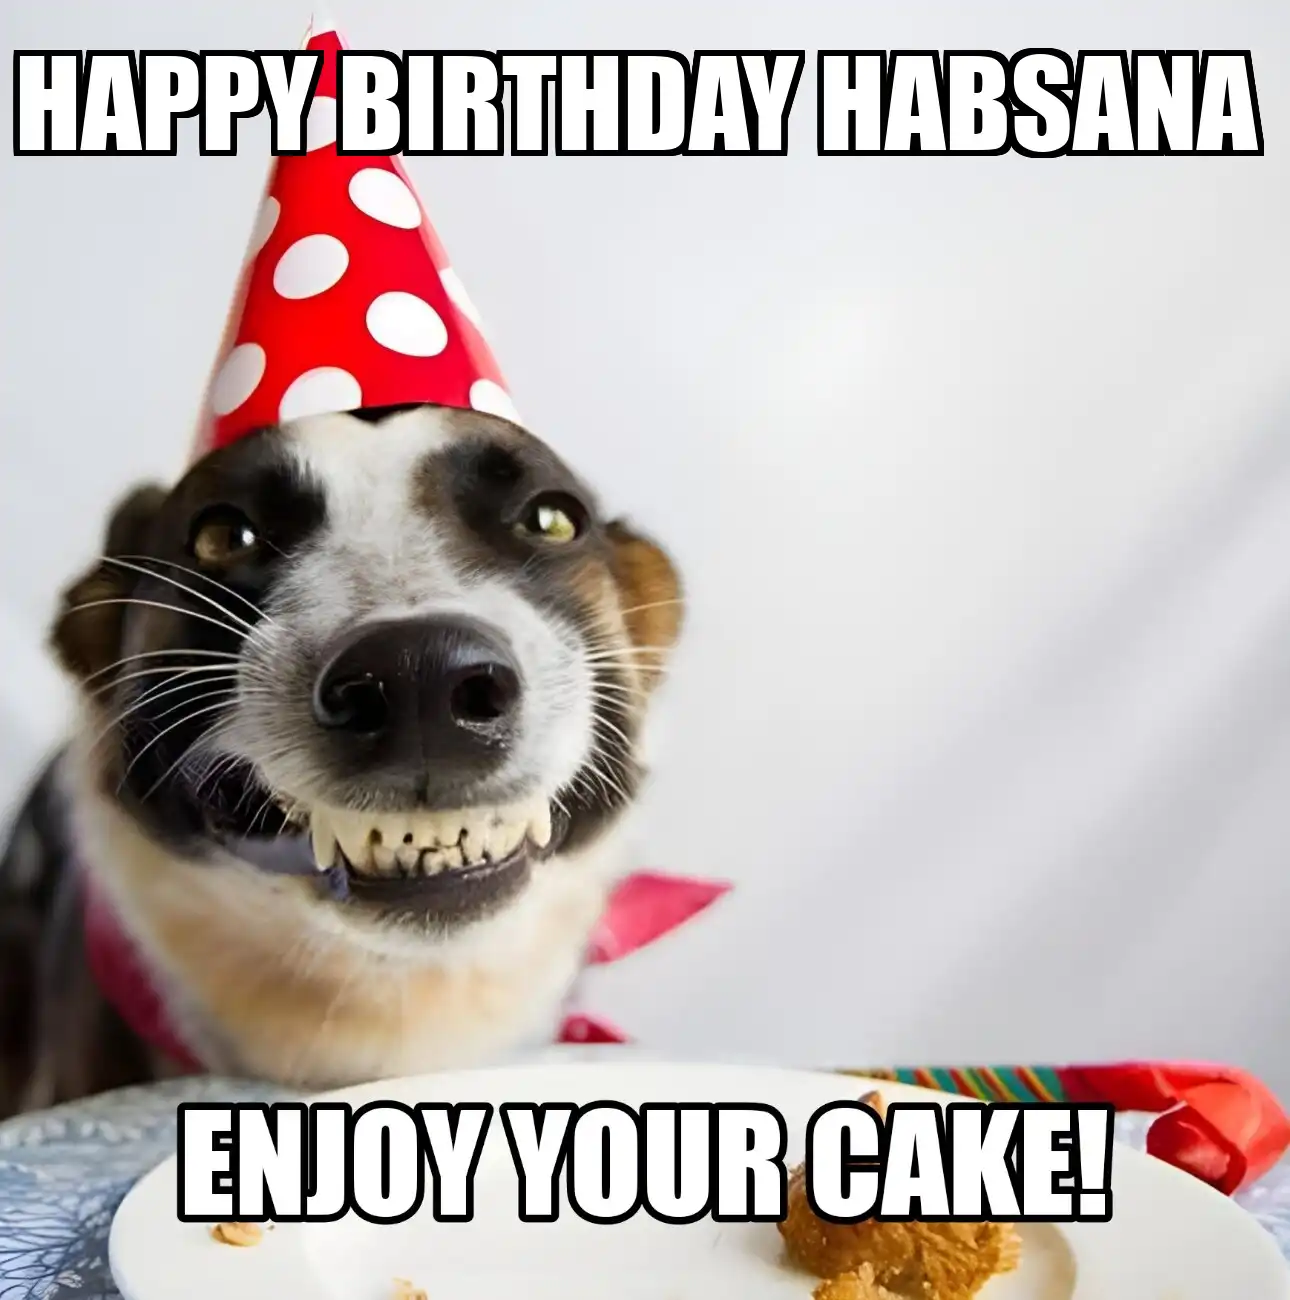 Happy Birthday Habsana Enjoy Your Cake Dog Meme